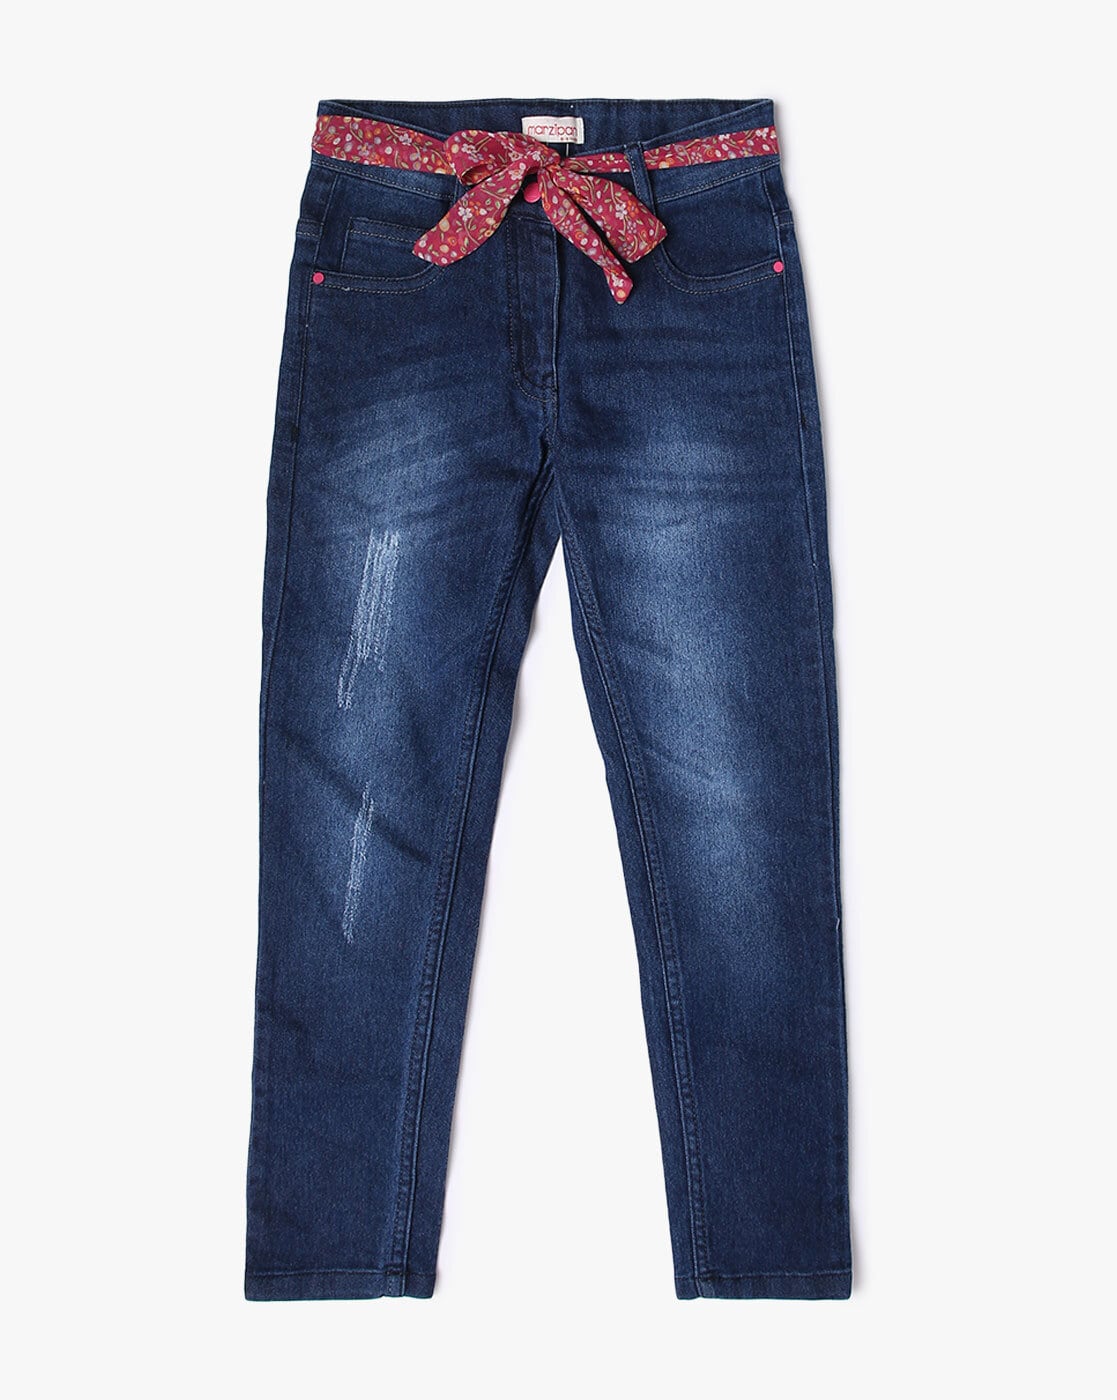 Designer Pearl Hole Denim Boys Pants For Girls Fashionable Kids Clothing  From Alex_zeng, $7.54 | DHgate.Com